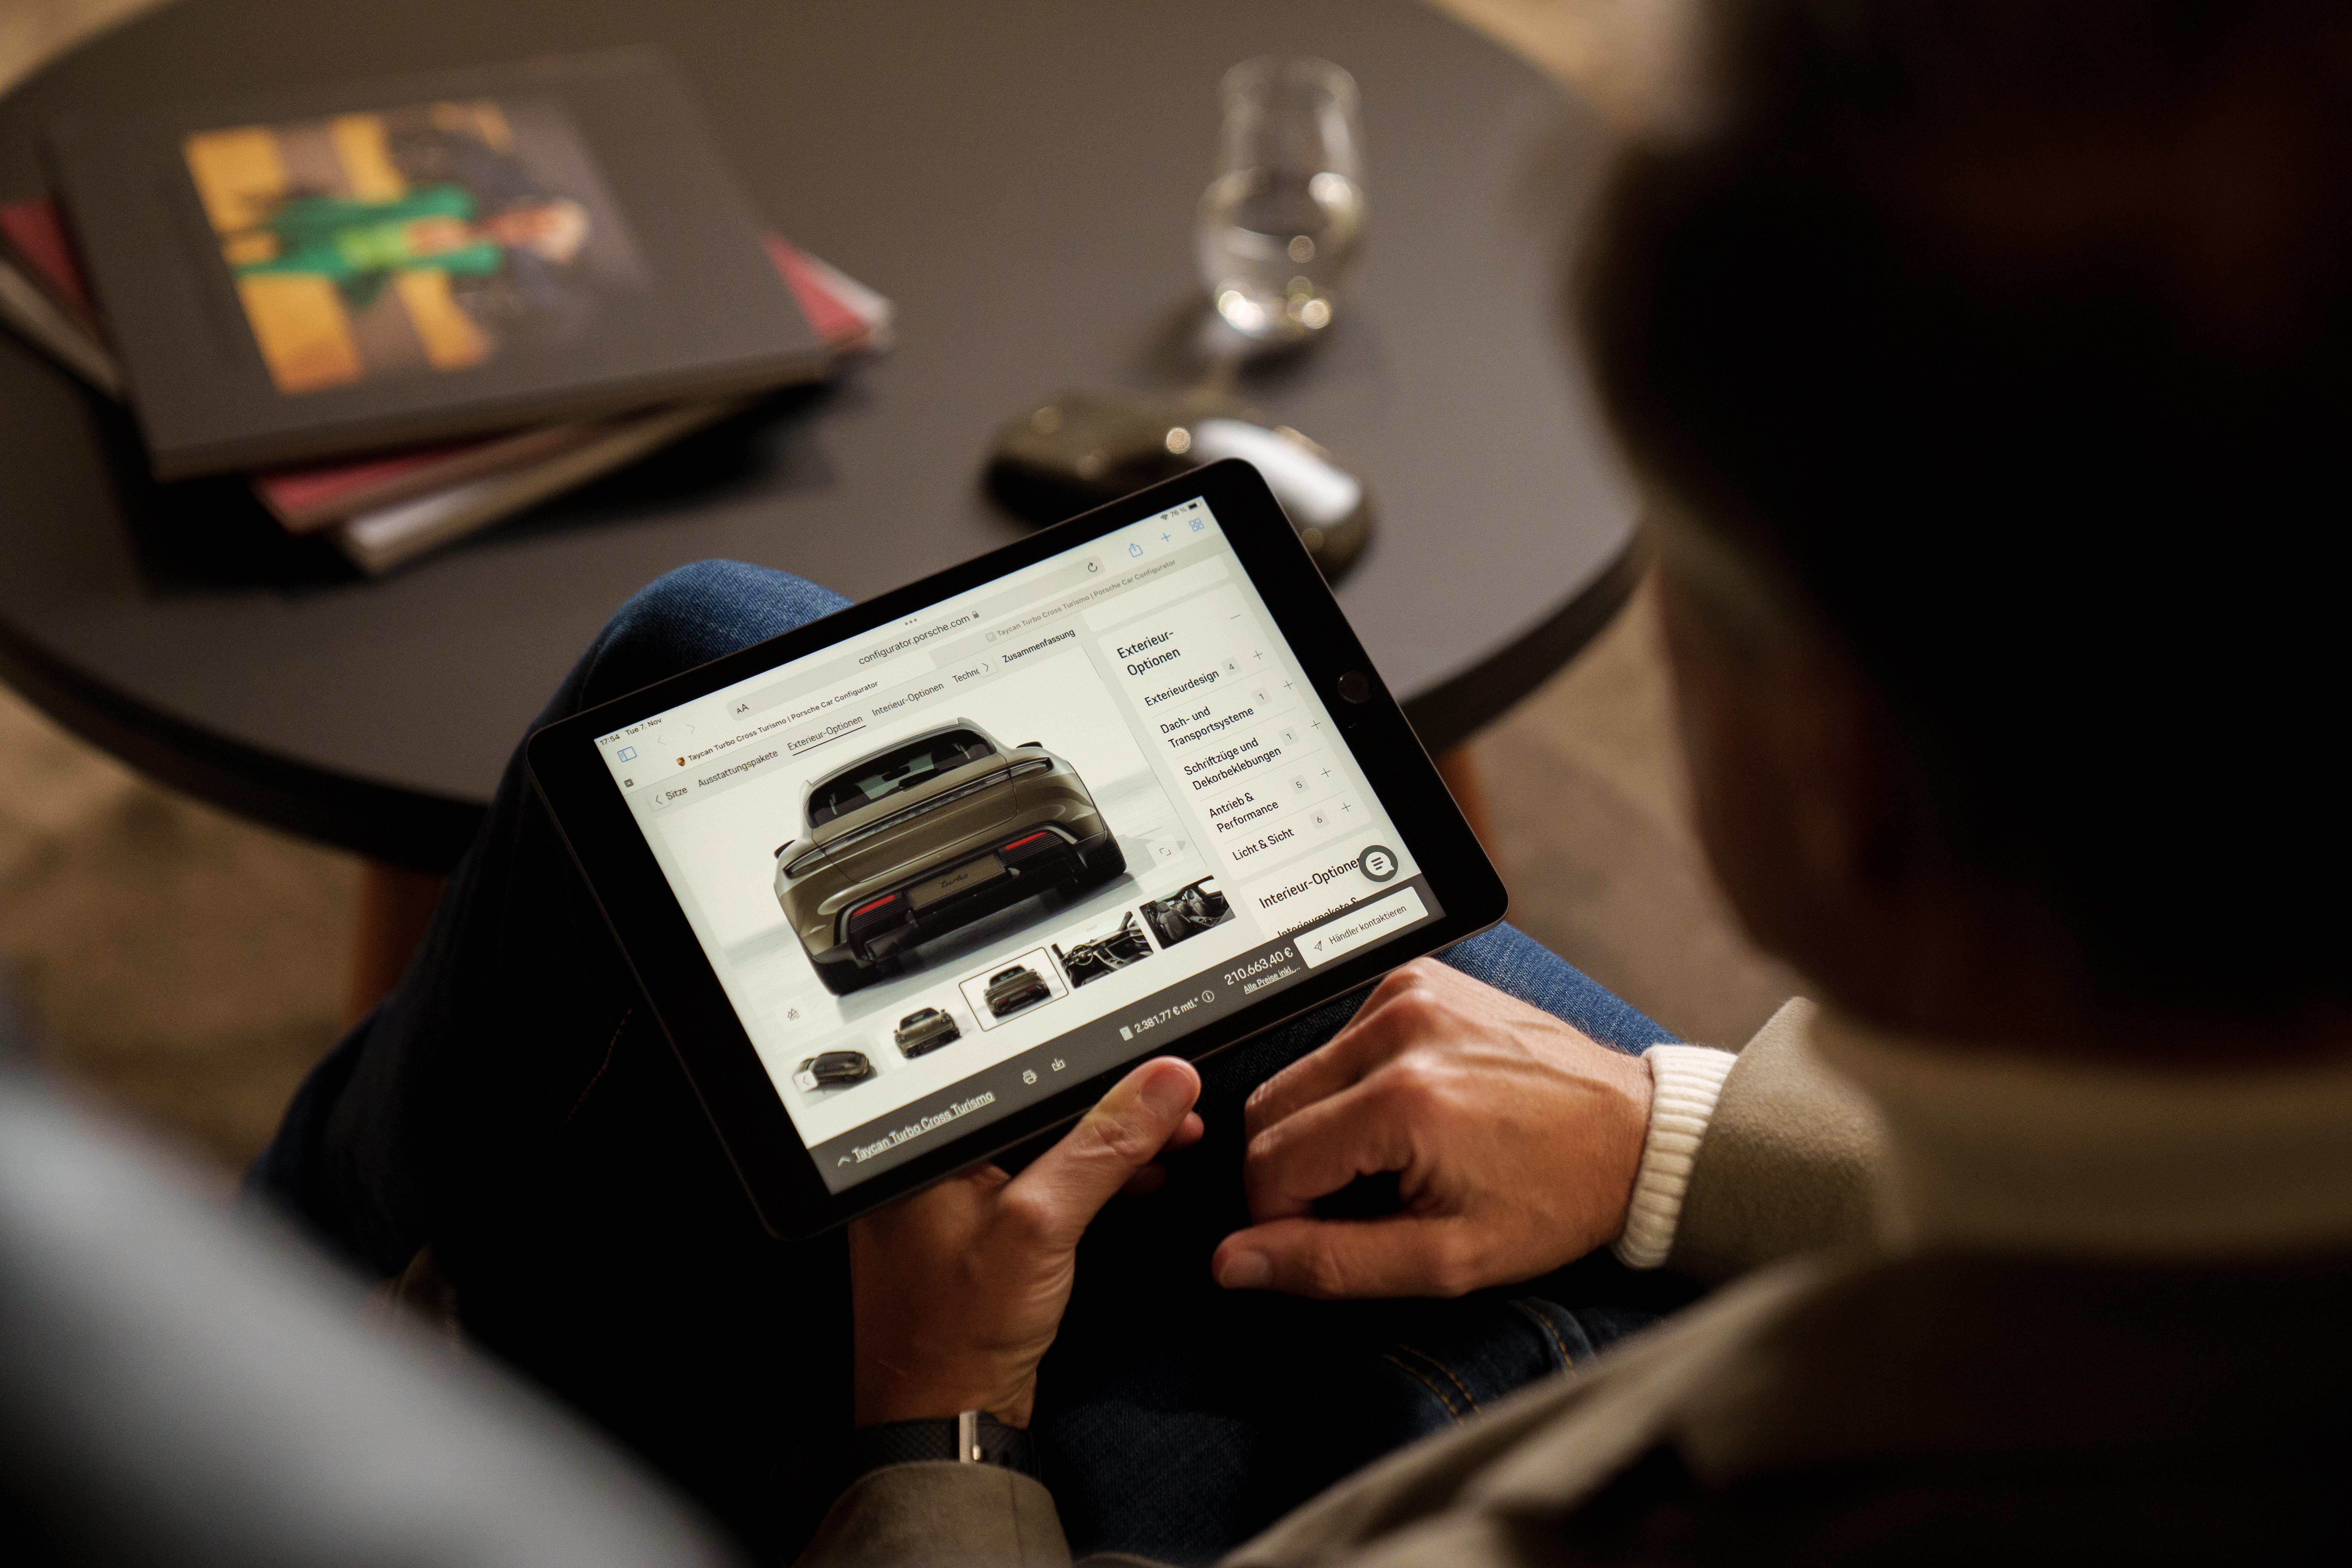 Man looks at iPad showing Porsche Car Configurator